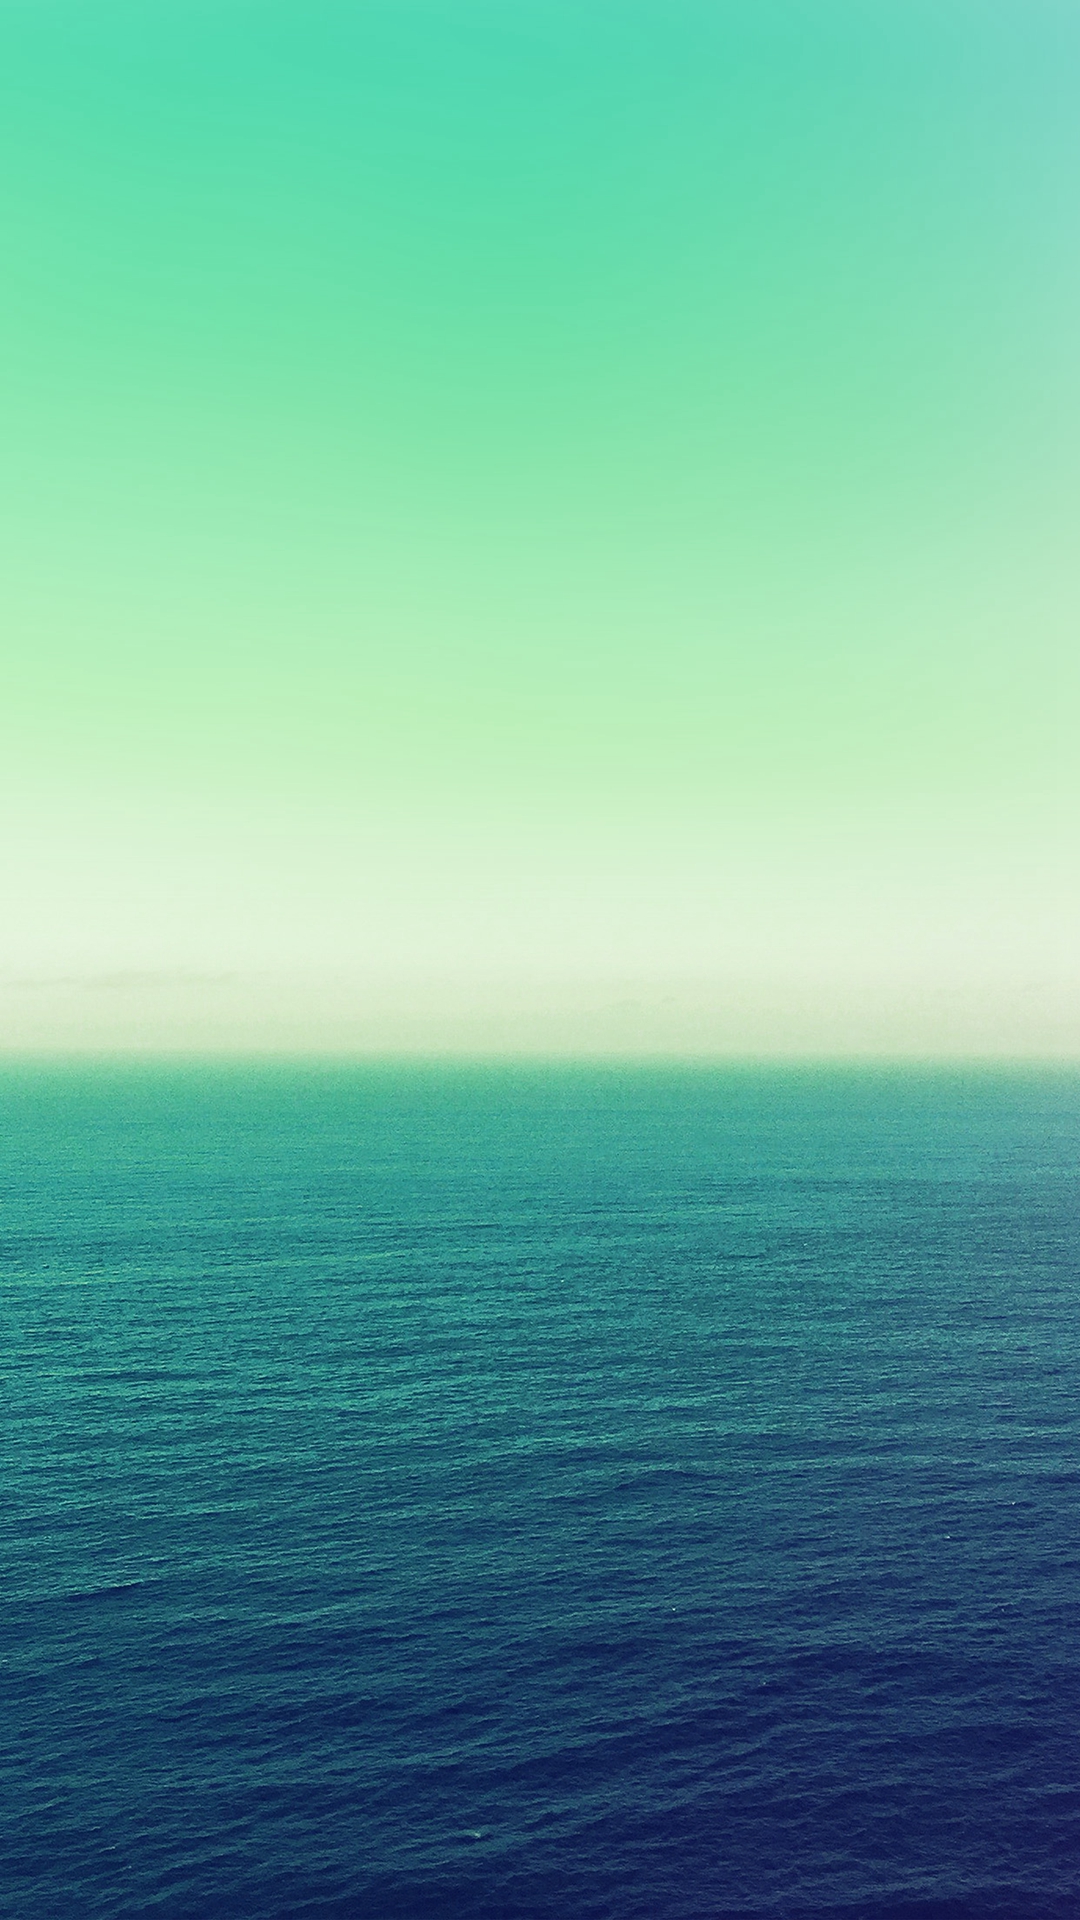 papel pintado verde mar,horizonte,cielo,mar,verde,azul